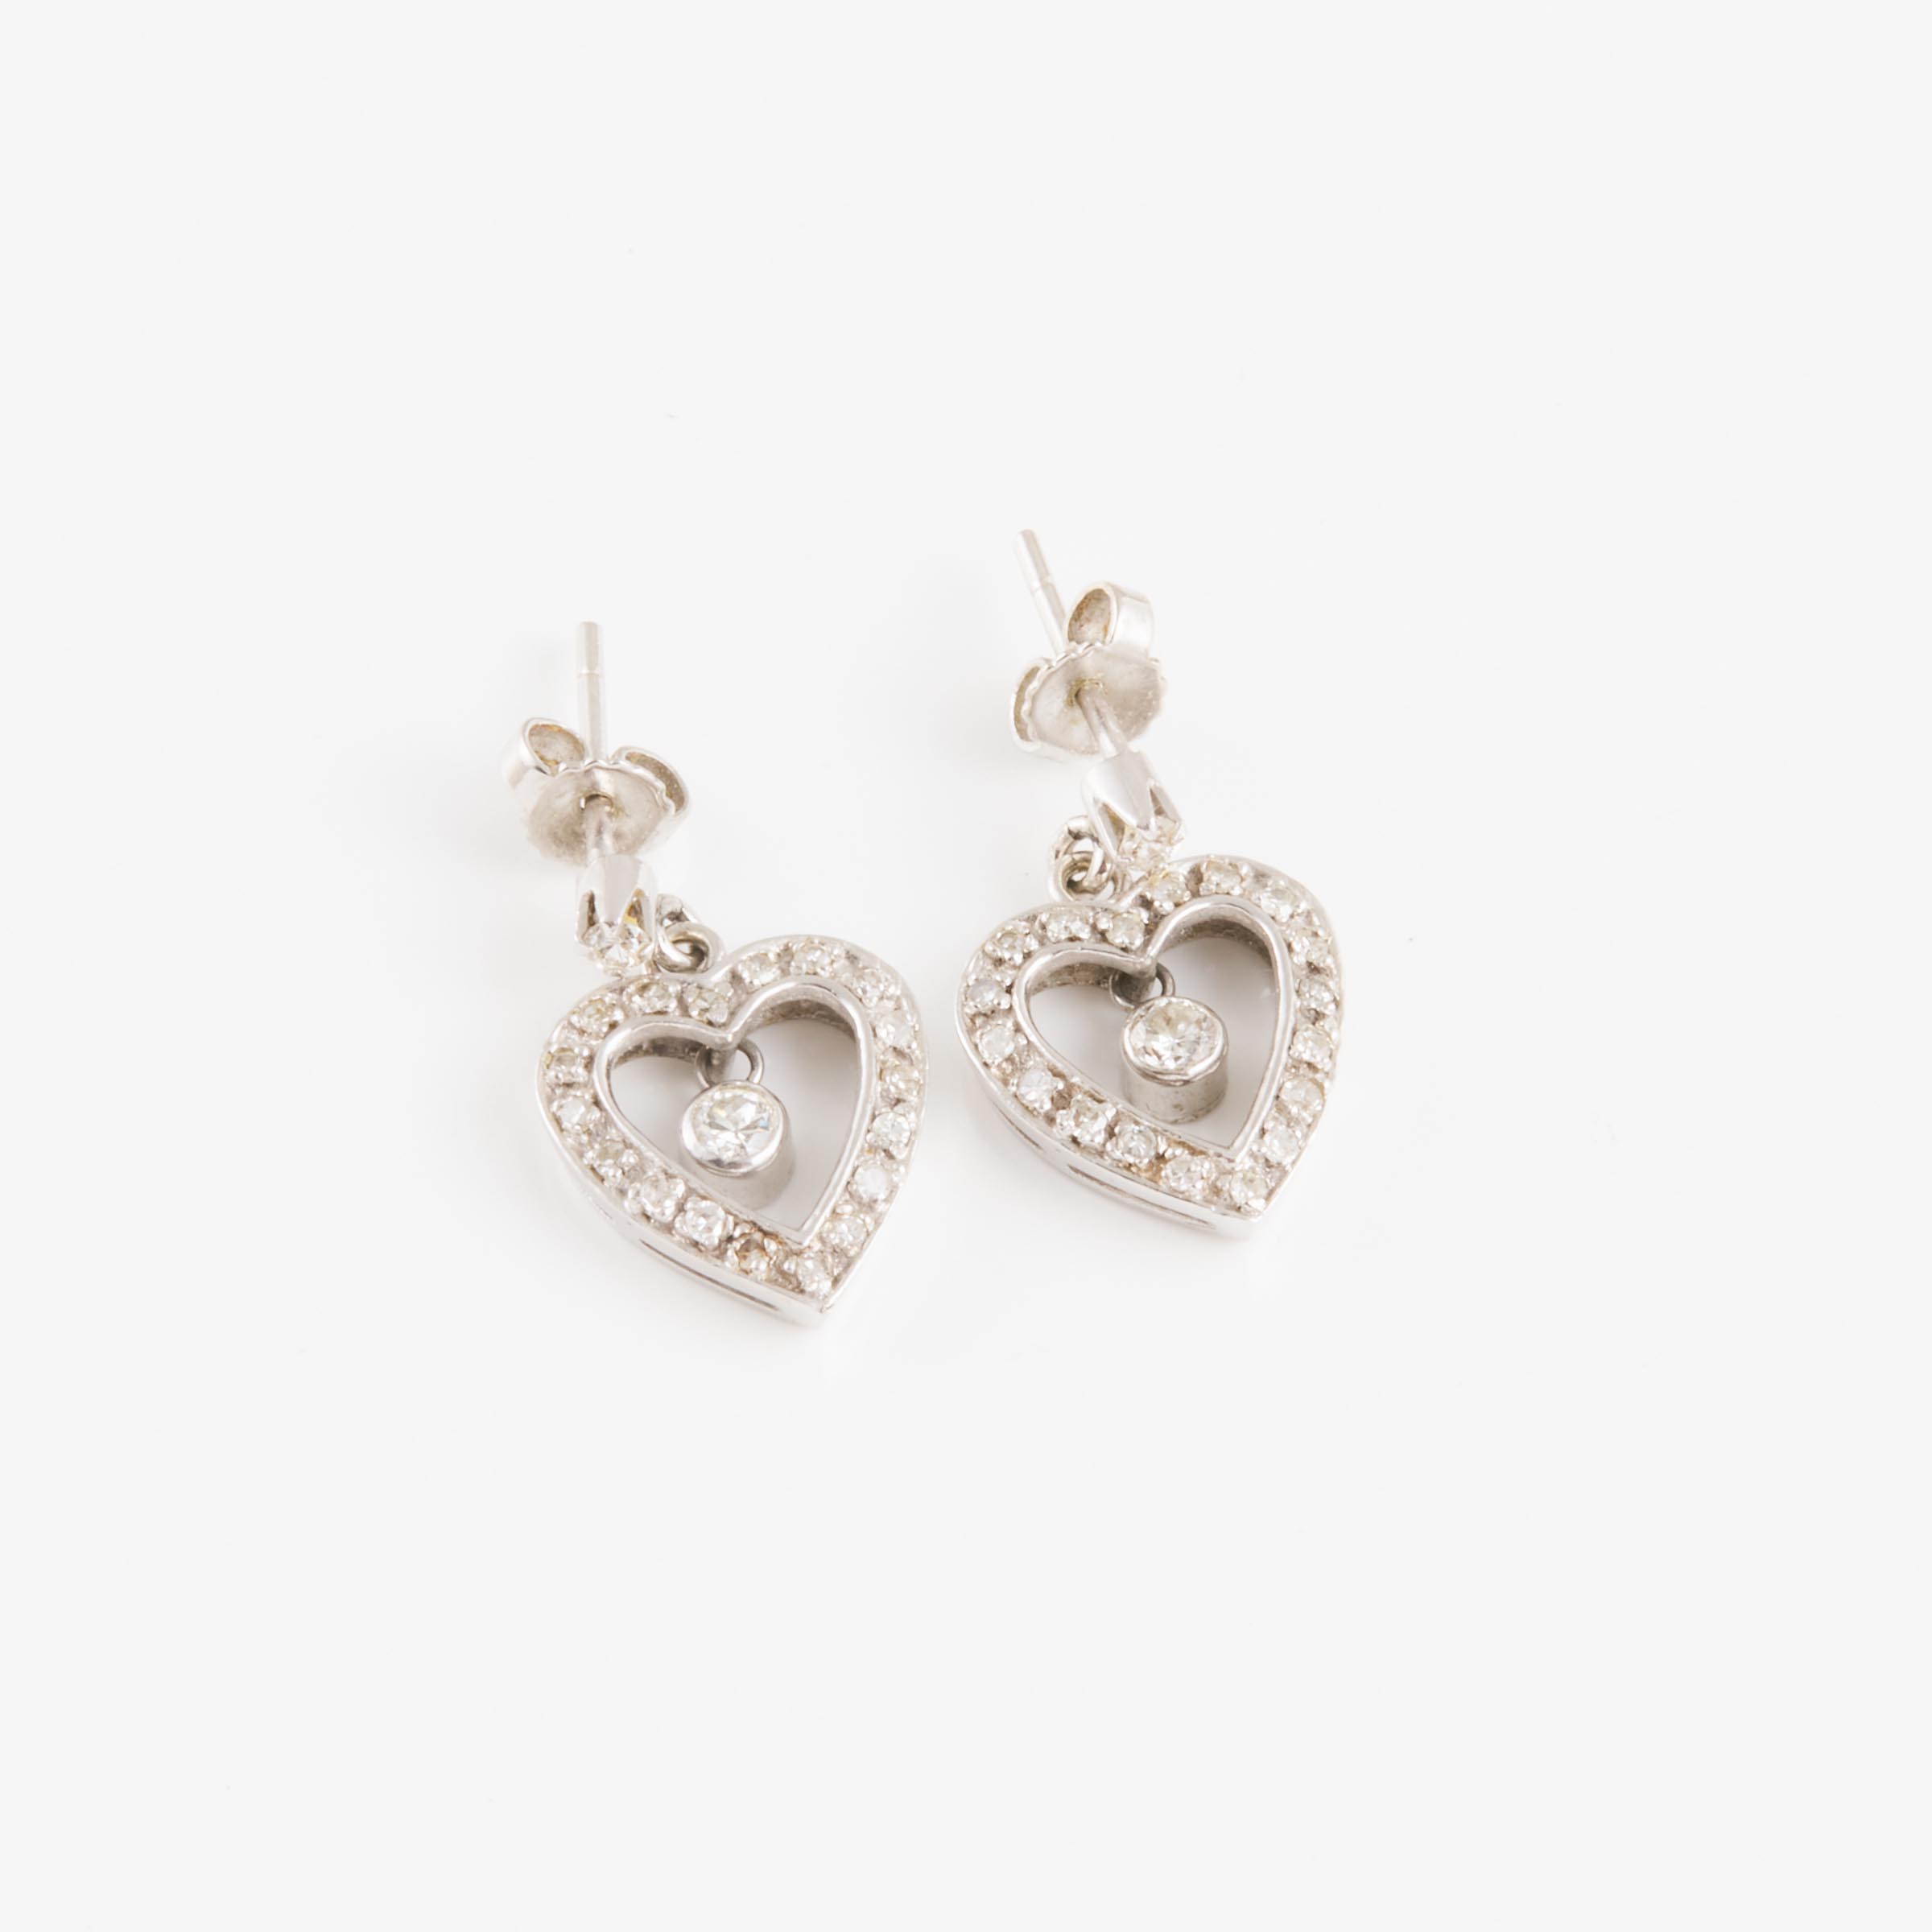 Pair Of 14k White Gold Heart Drop Earrings